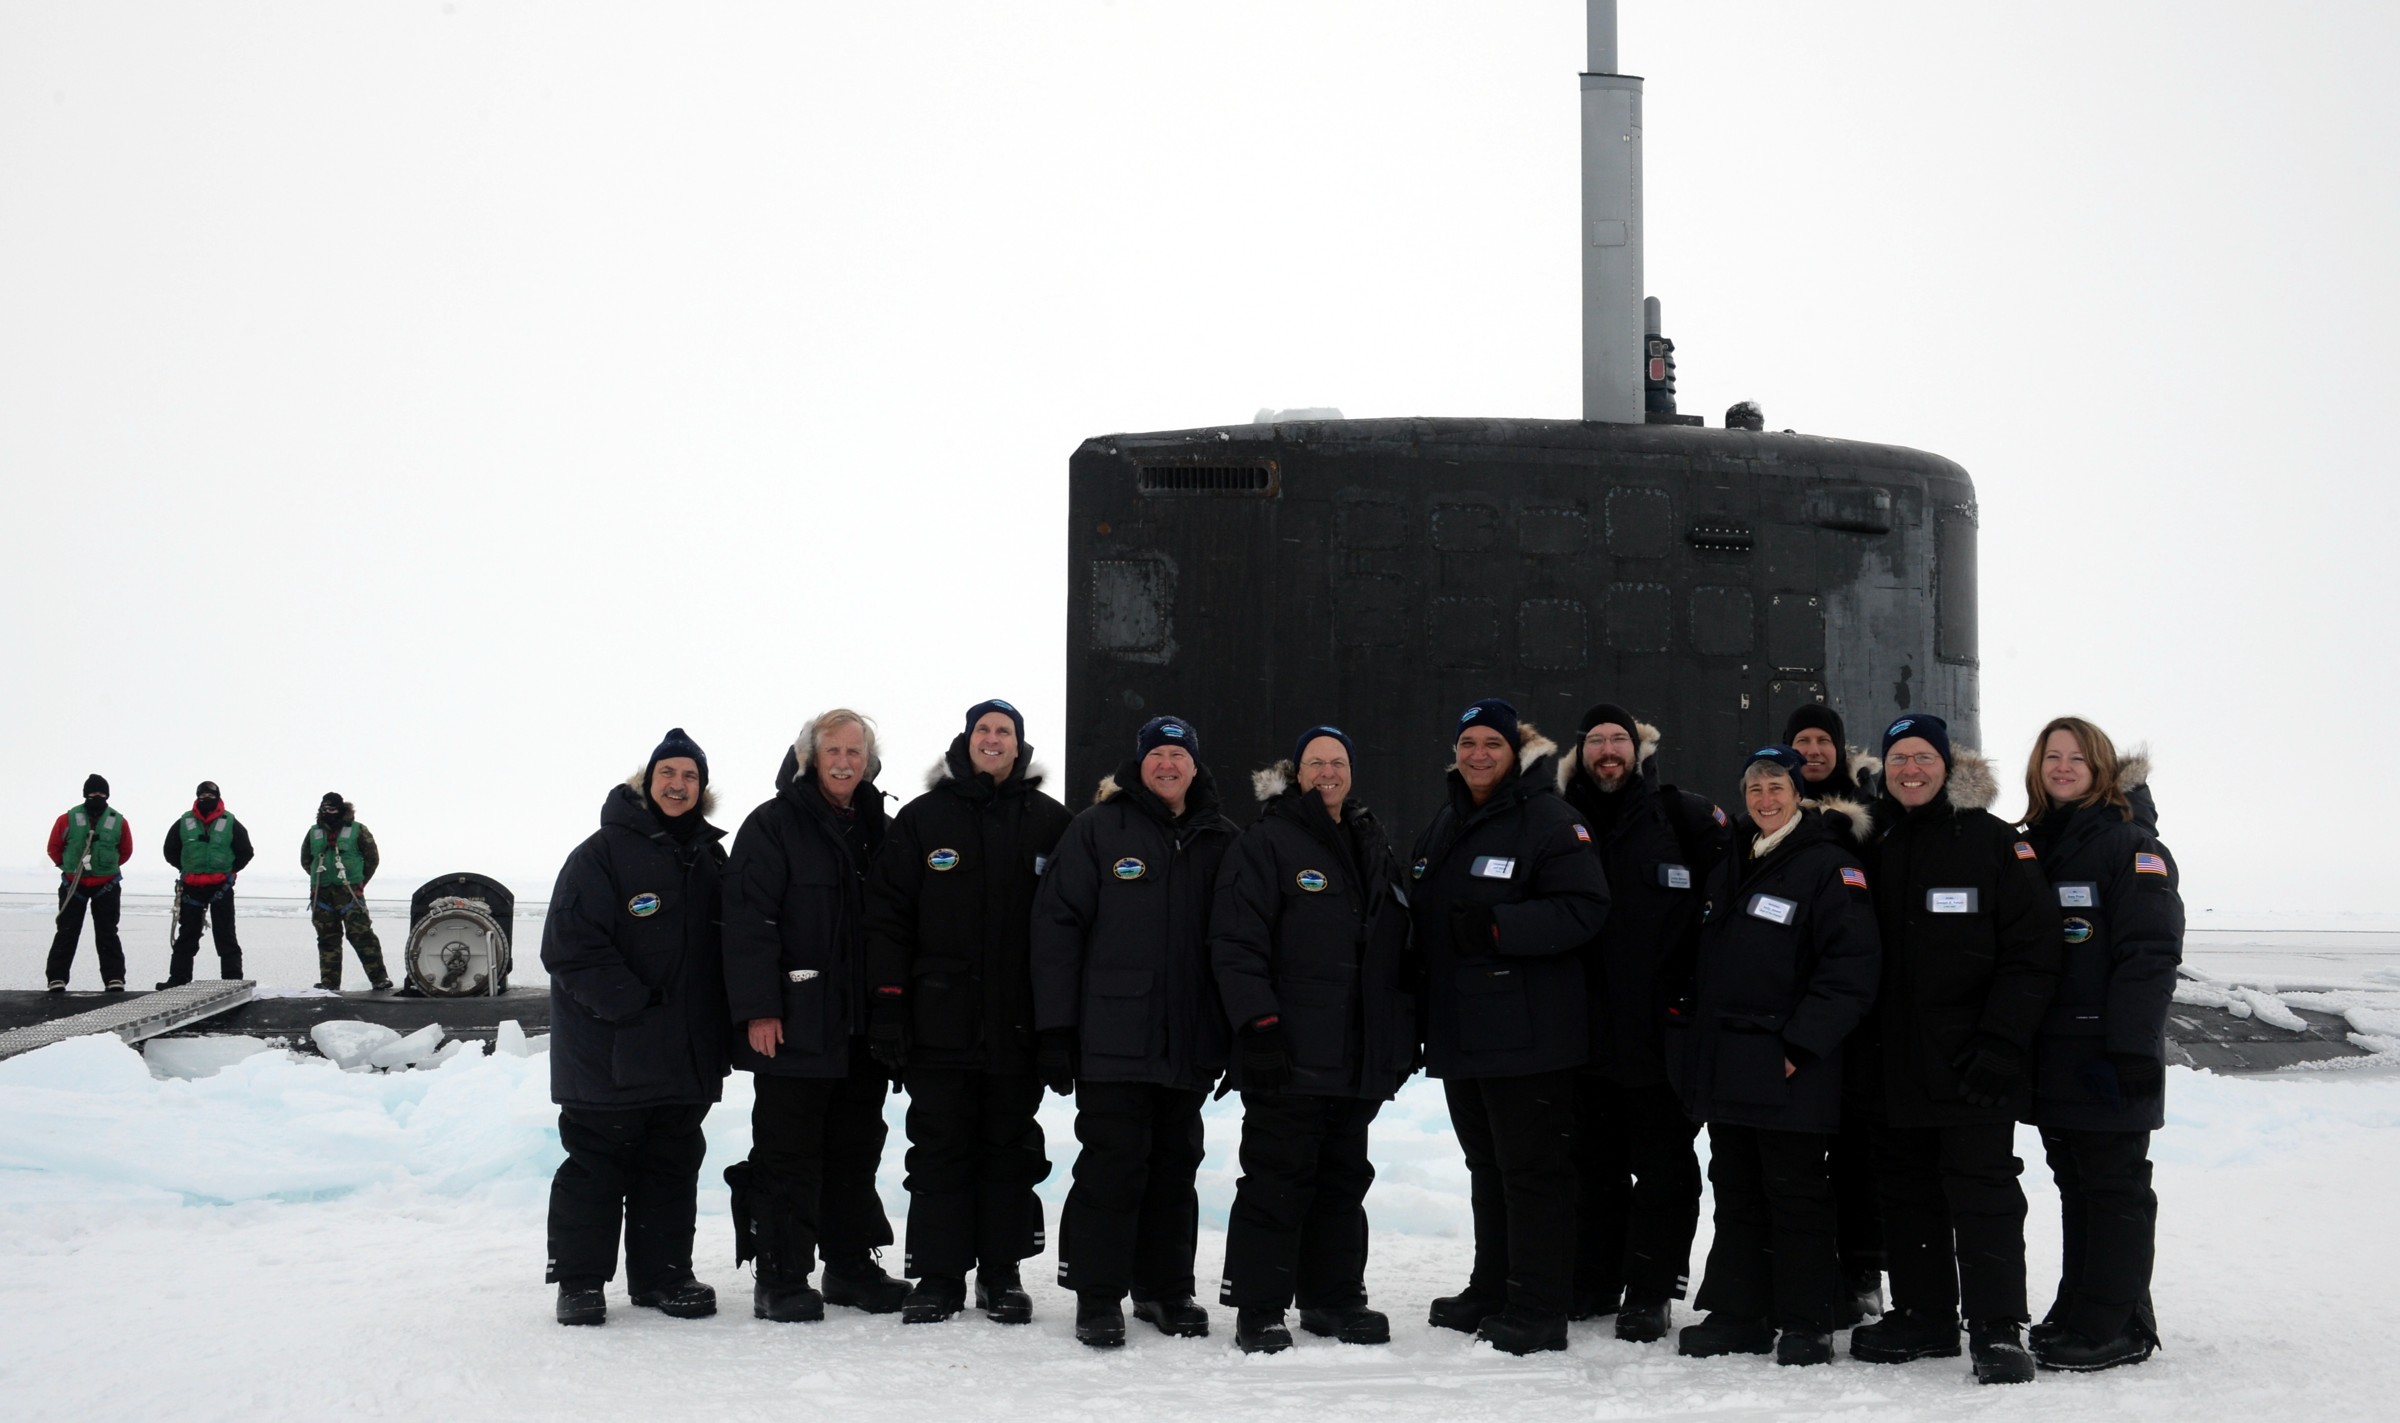 ssn-779 uss new mexico virginia class attack submarine us navy 2014 35 ice camp nautilus arctic ocean icex